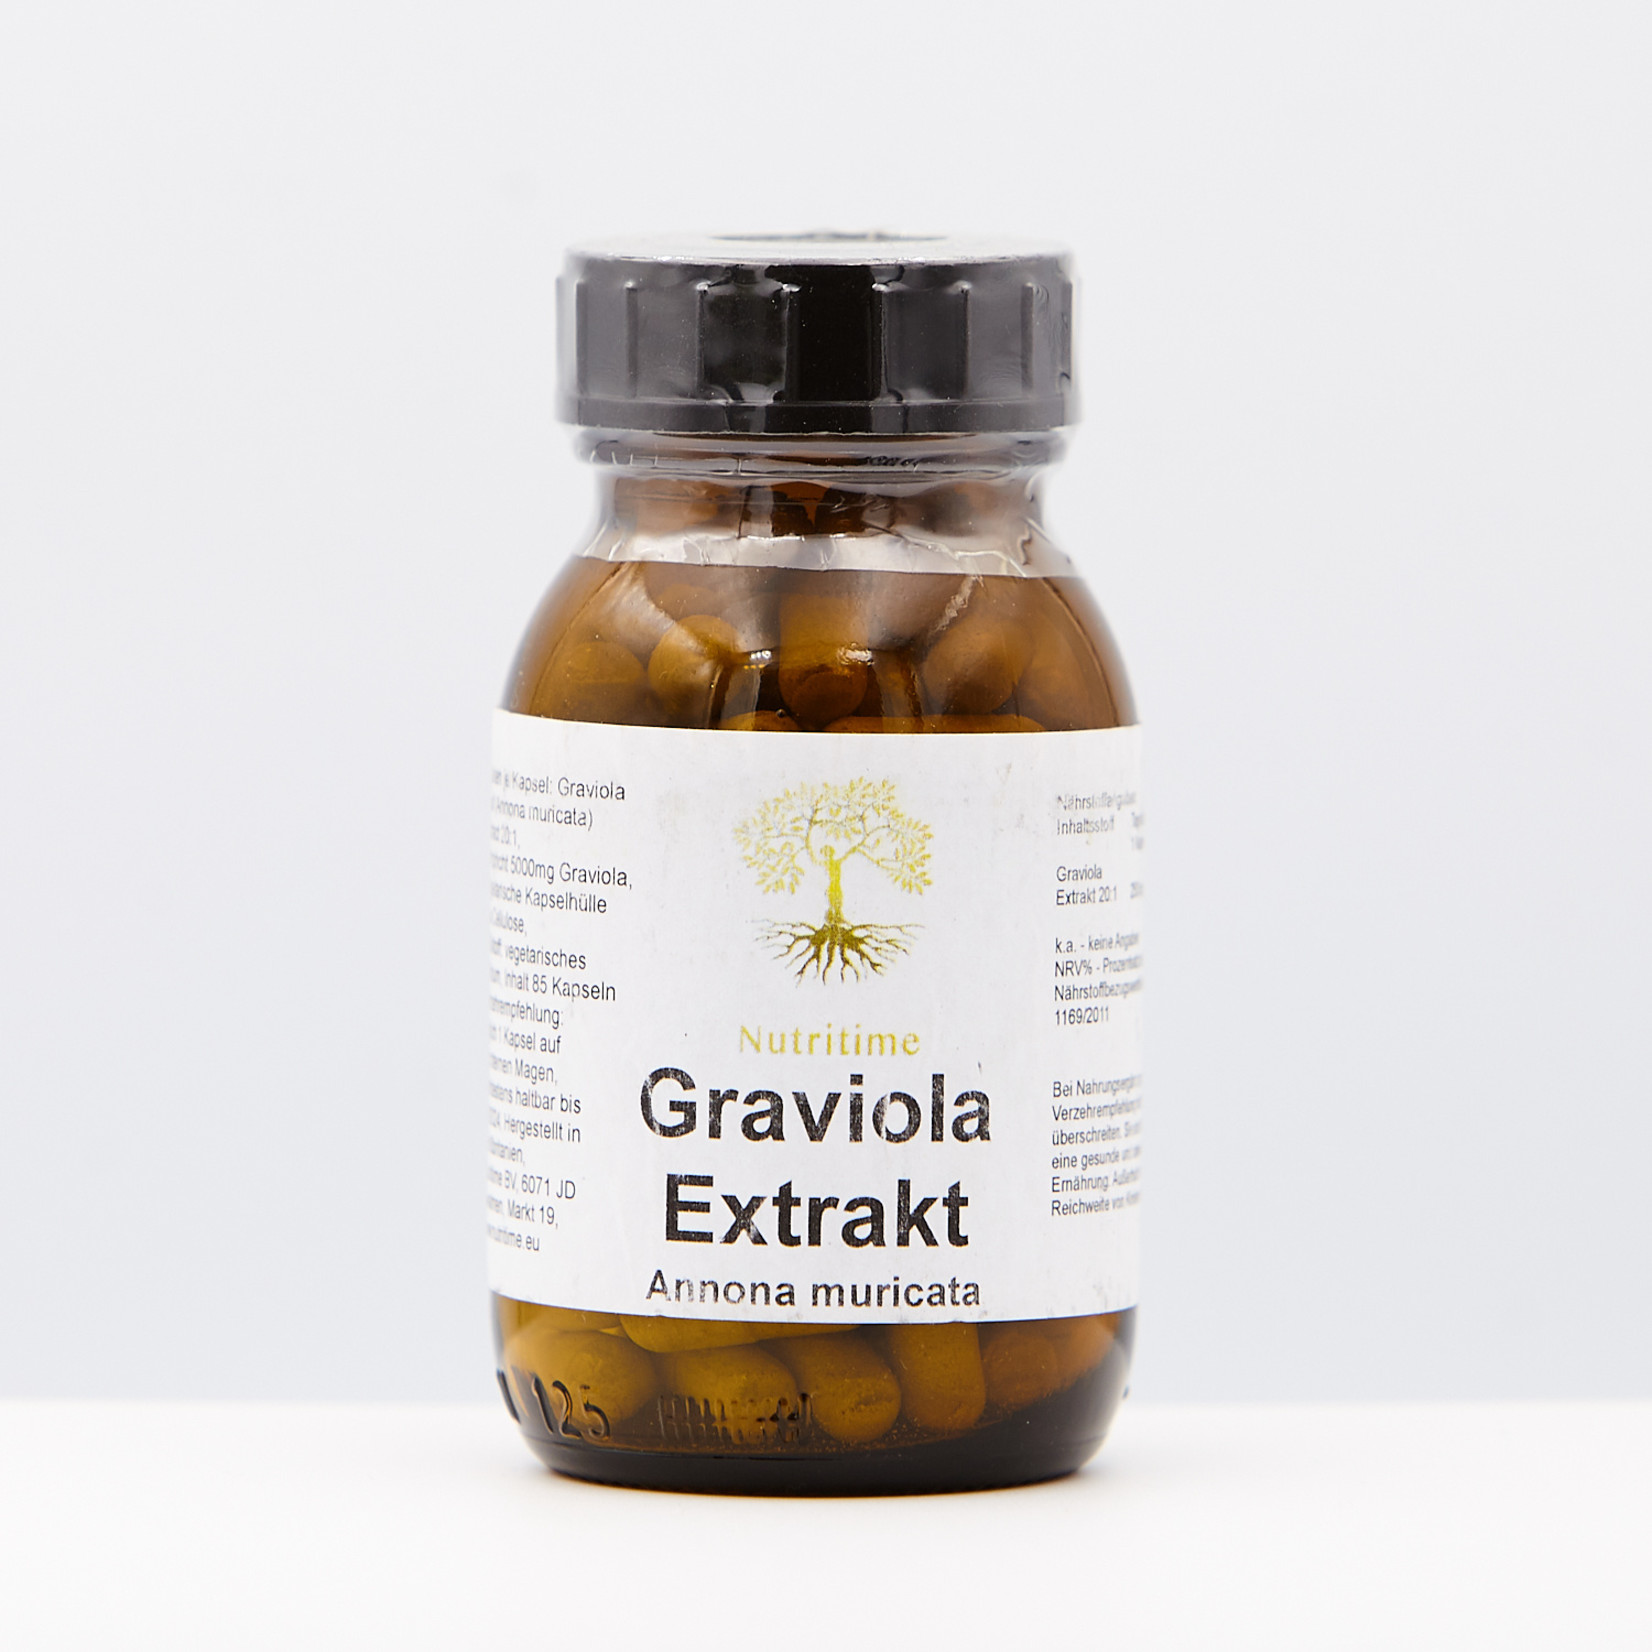 Nutritime Graviola Extract, Annona muricata 20:1